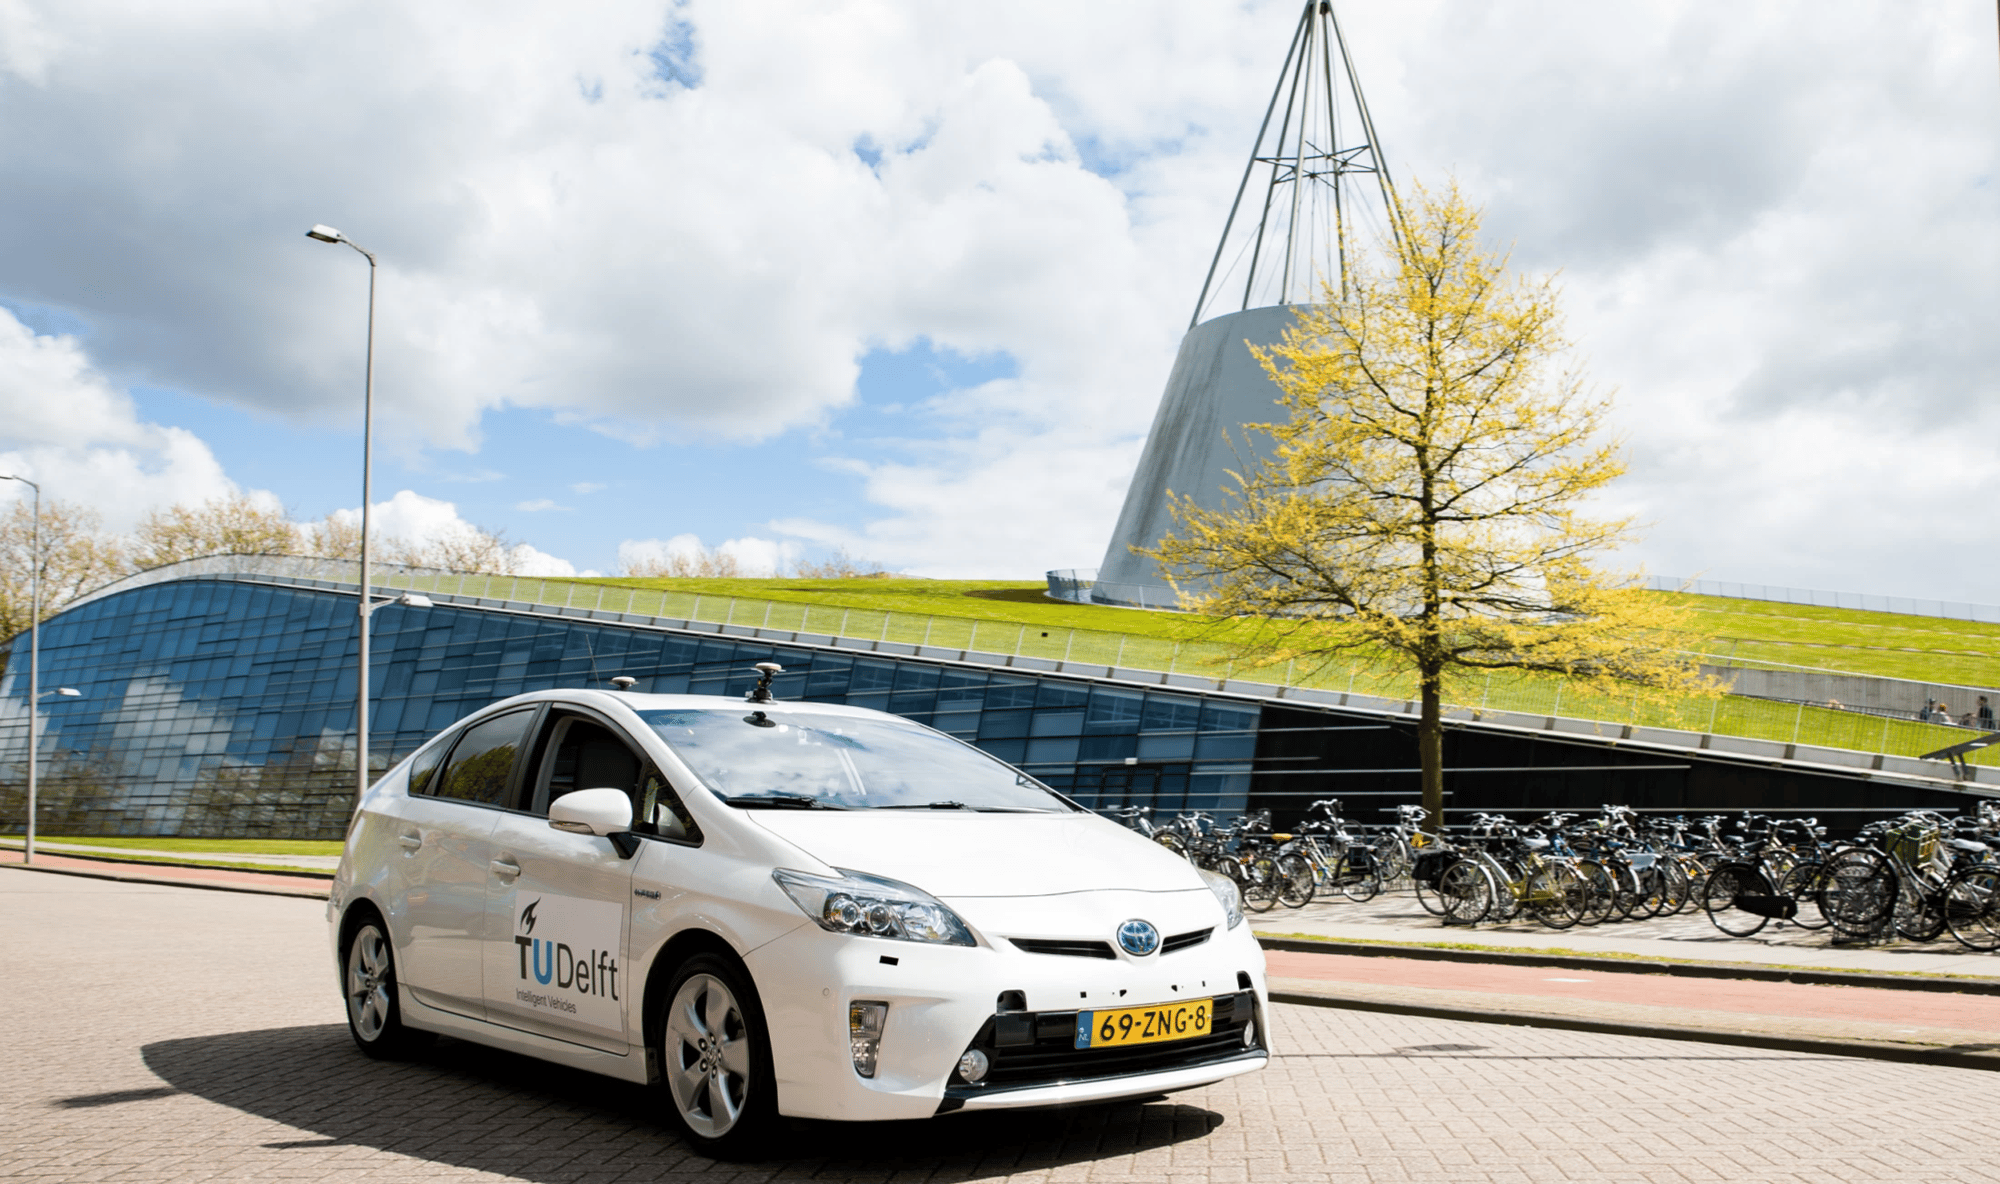 TU Delft self-driving car prototype